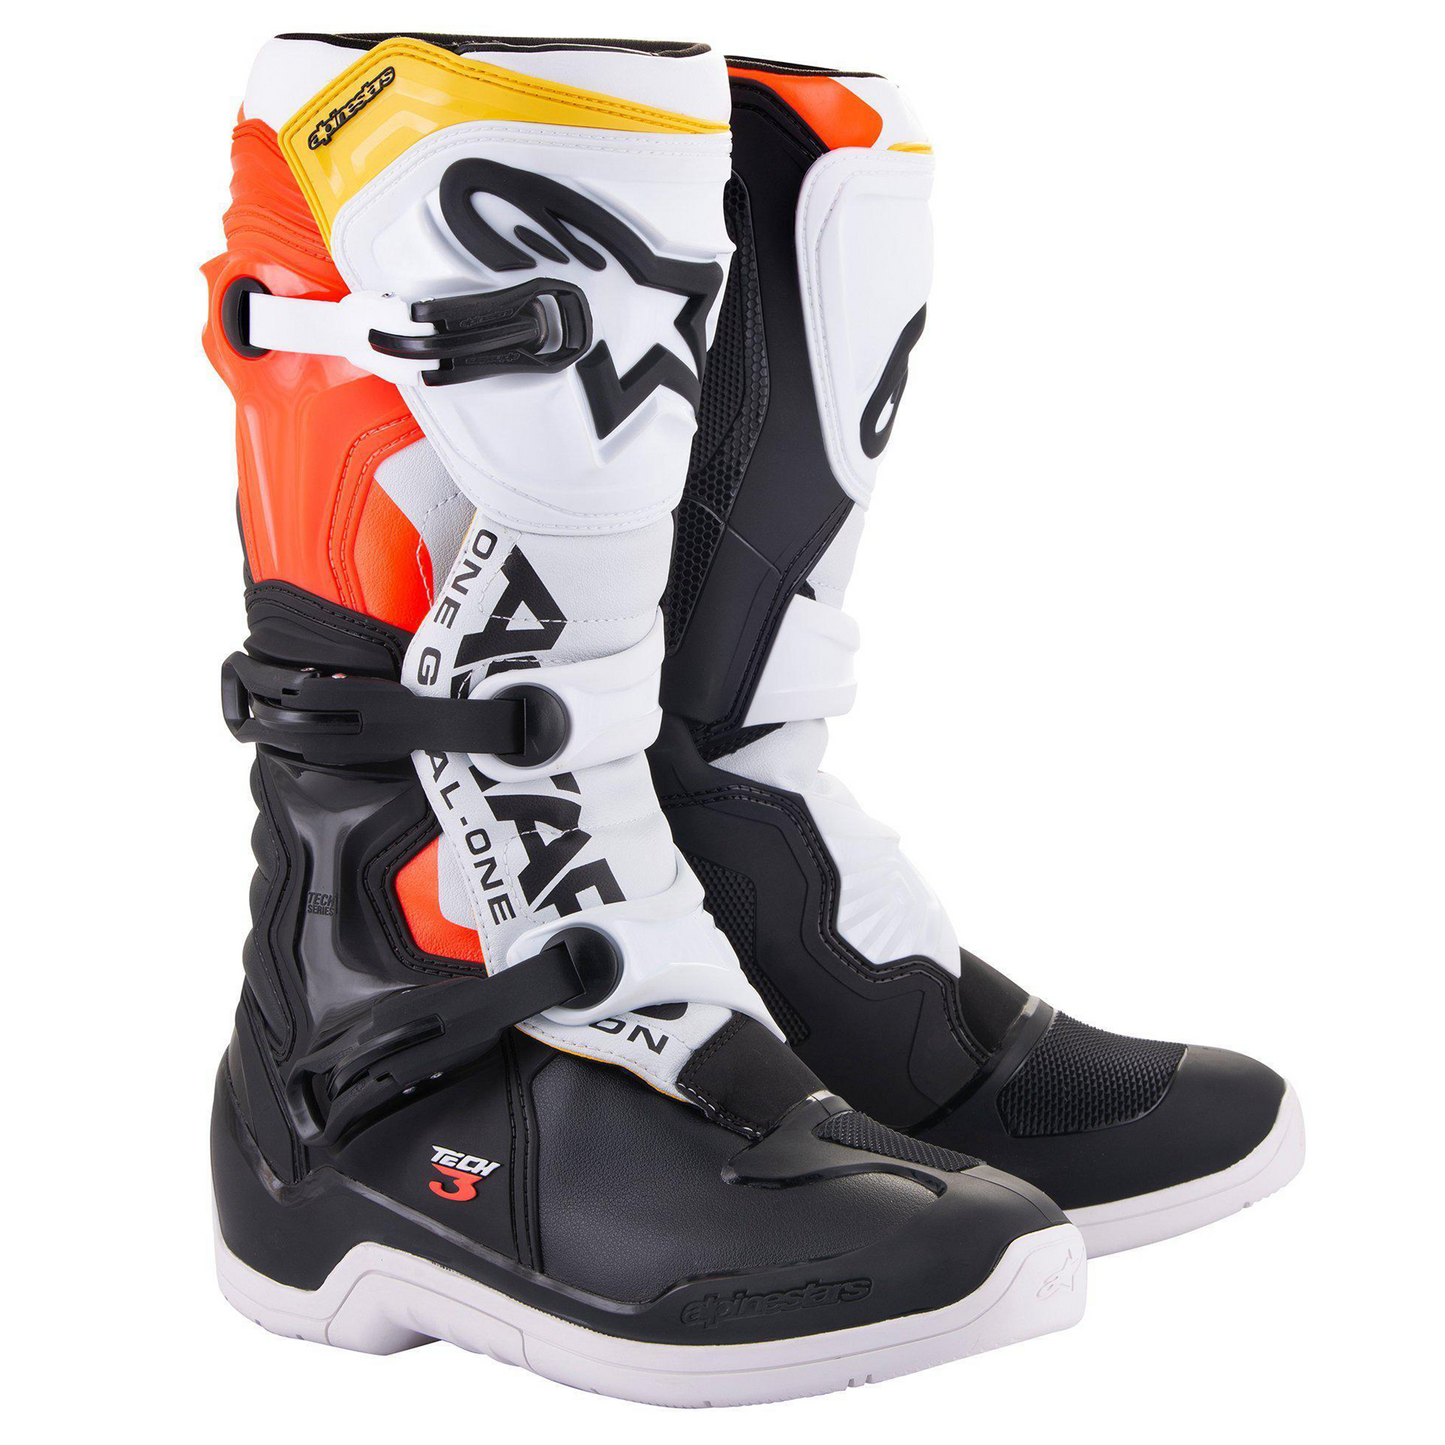 Alpinestars Tech 3 Motorcross Boots - Black/White/Red/Flo Yellow (1238)